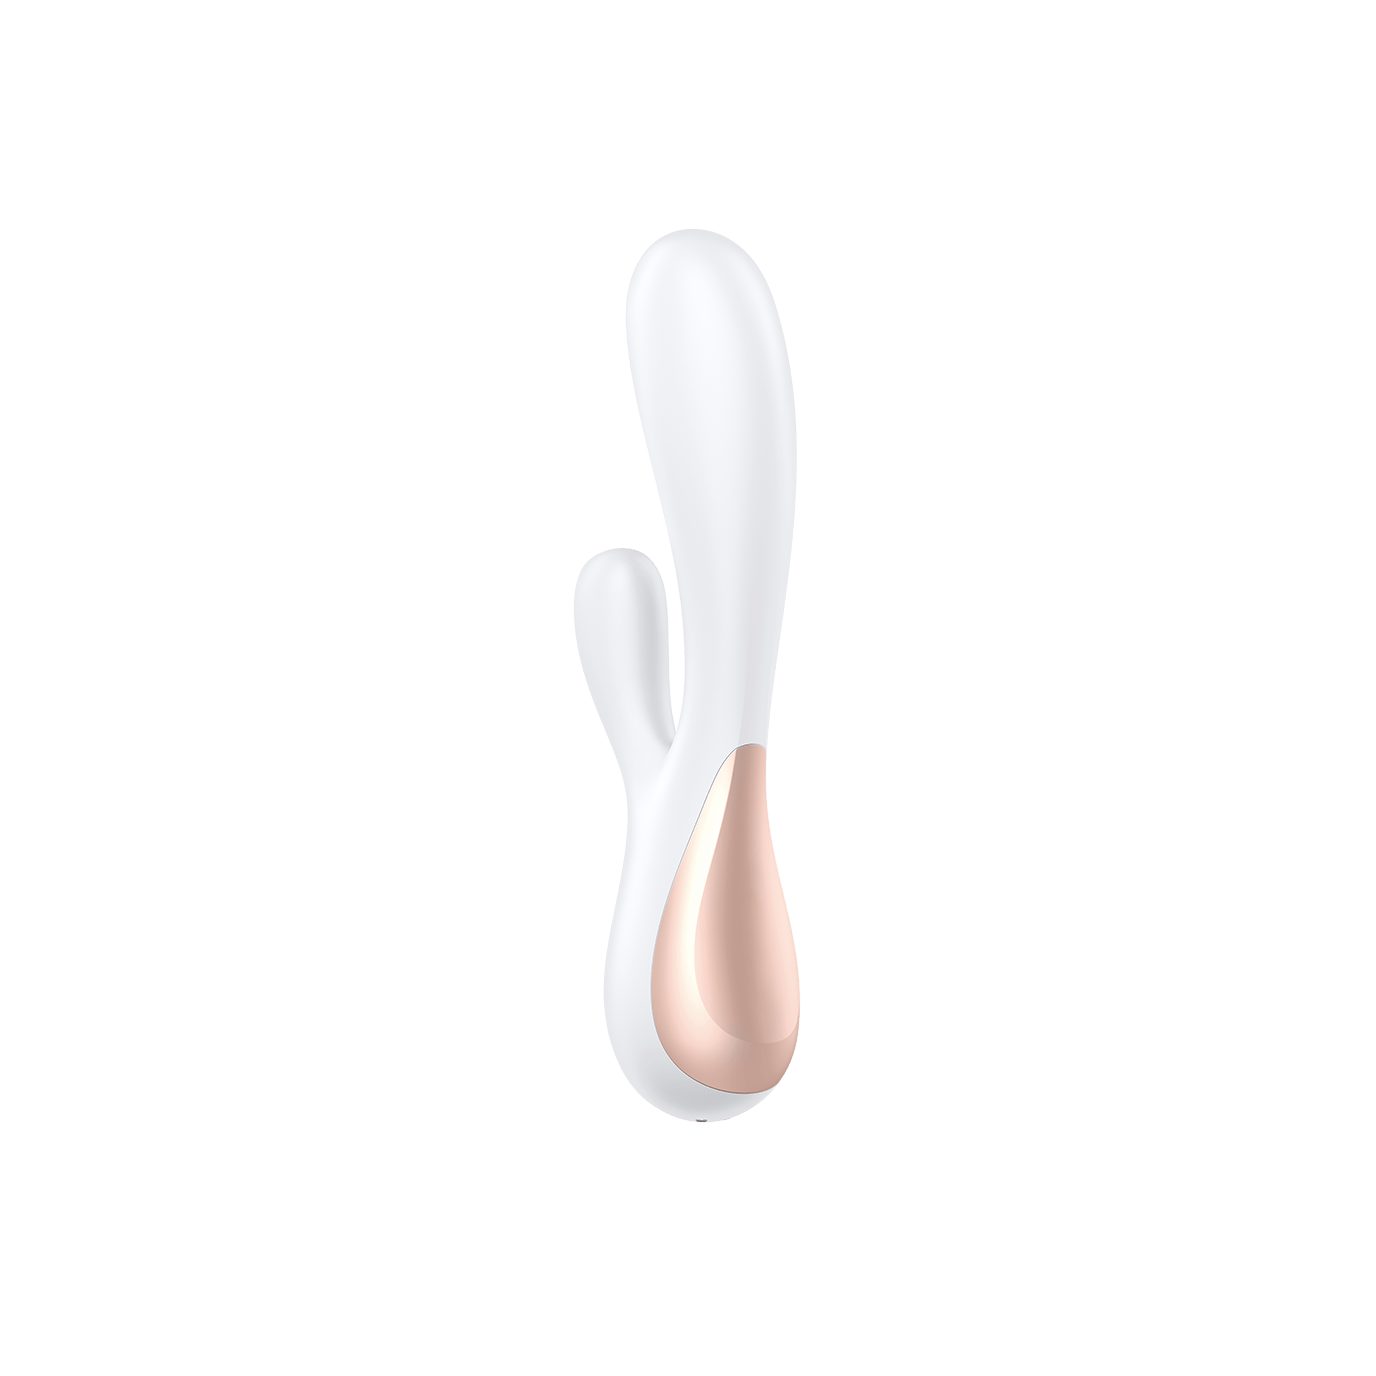 mit (20,5cm) App Satisfyer Satisfyer Vibrator Klitoris 'Mono Connect App' Klitoris-Stimulator Flex